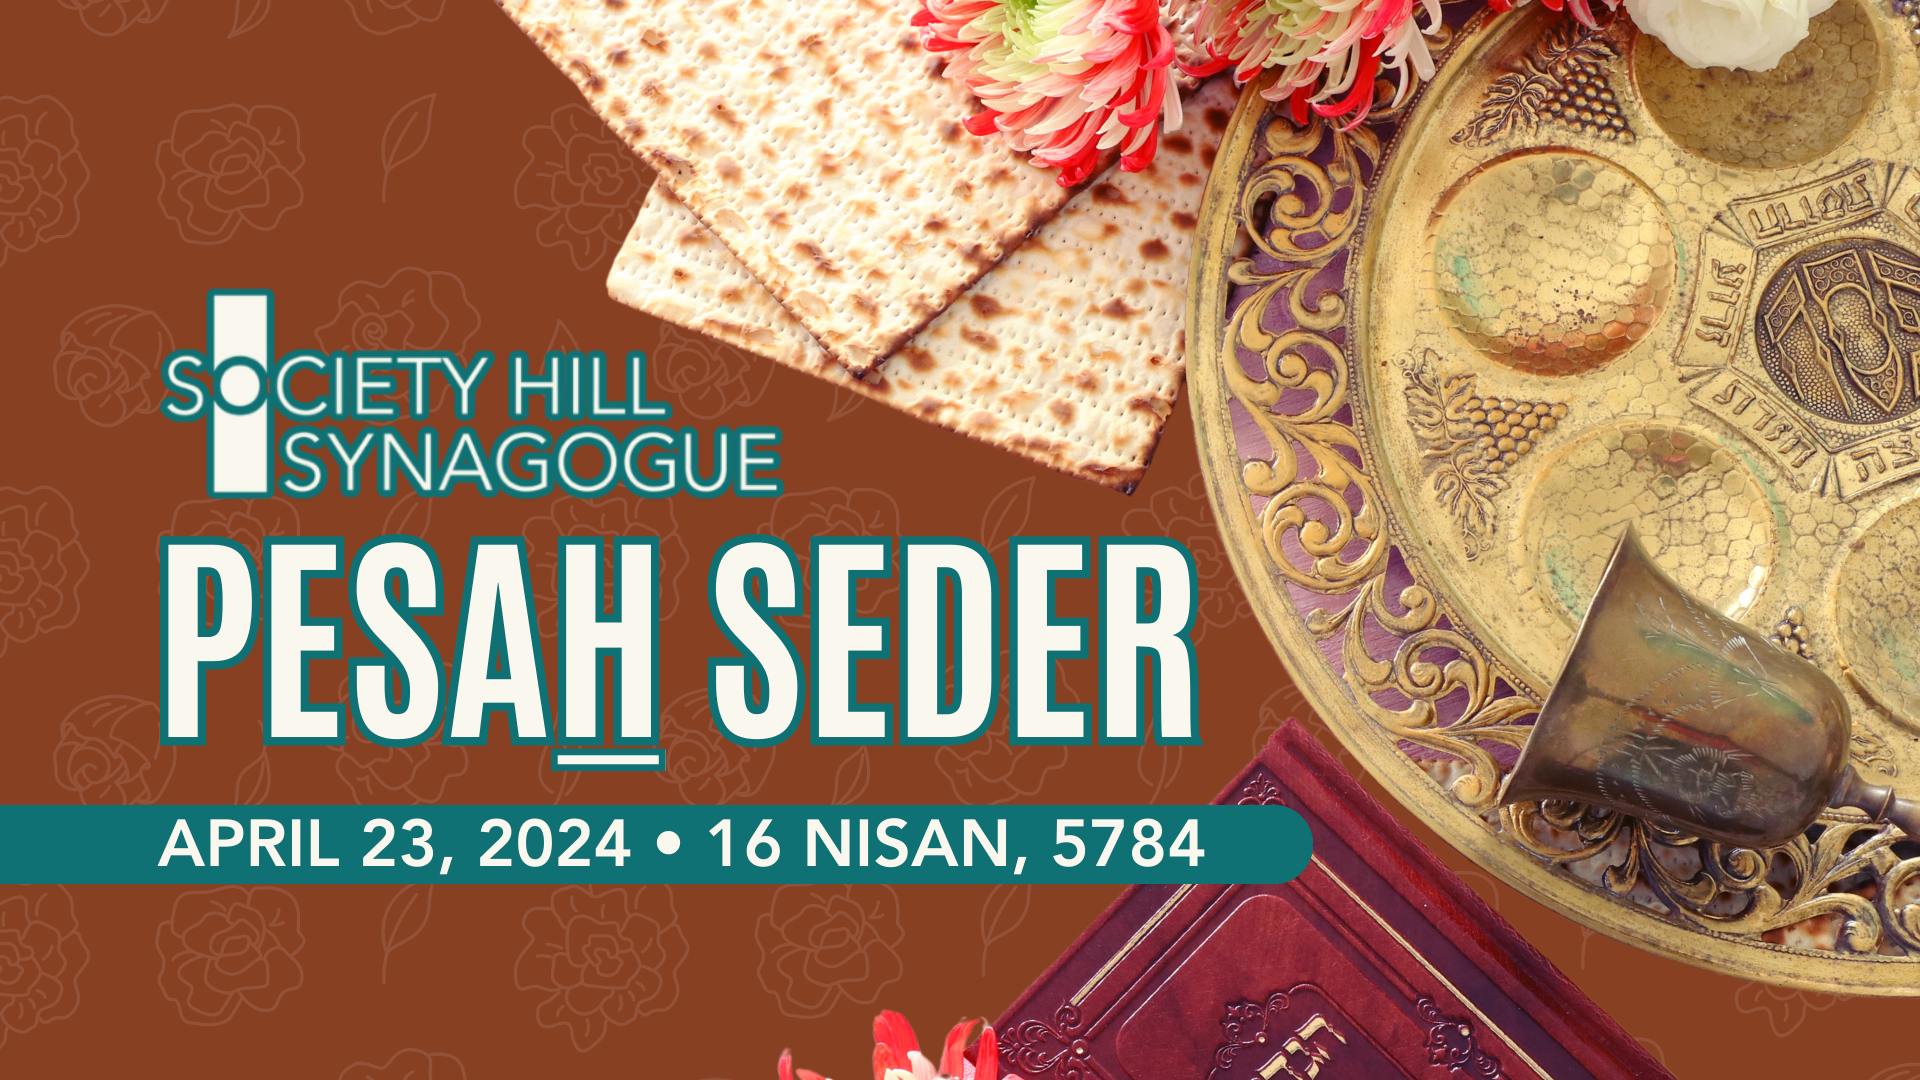 Society Hill Synagogue Pesah Seder — image of a seder plate with matzah, a kiddush cup, a Hagaddah, and flowers with the heading "Society Hill Synagogue Pesah Seder: April 23, 2024 / 16 Nisan 5784"